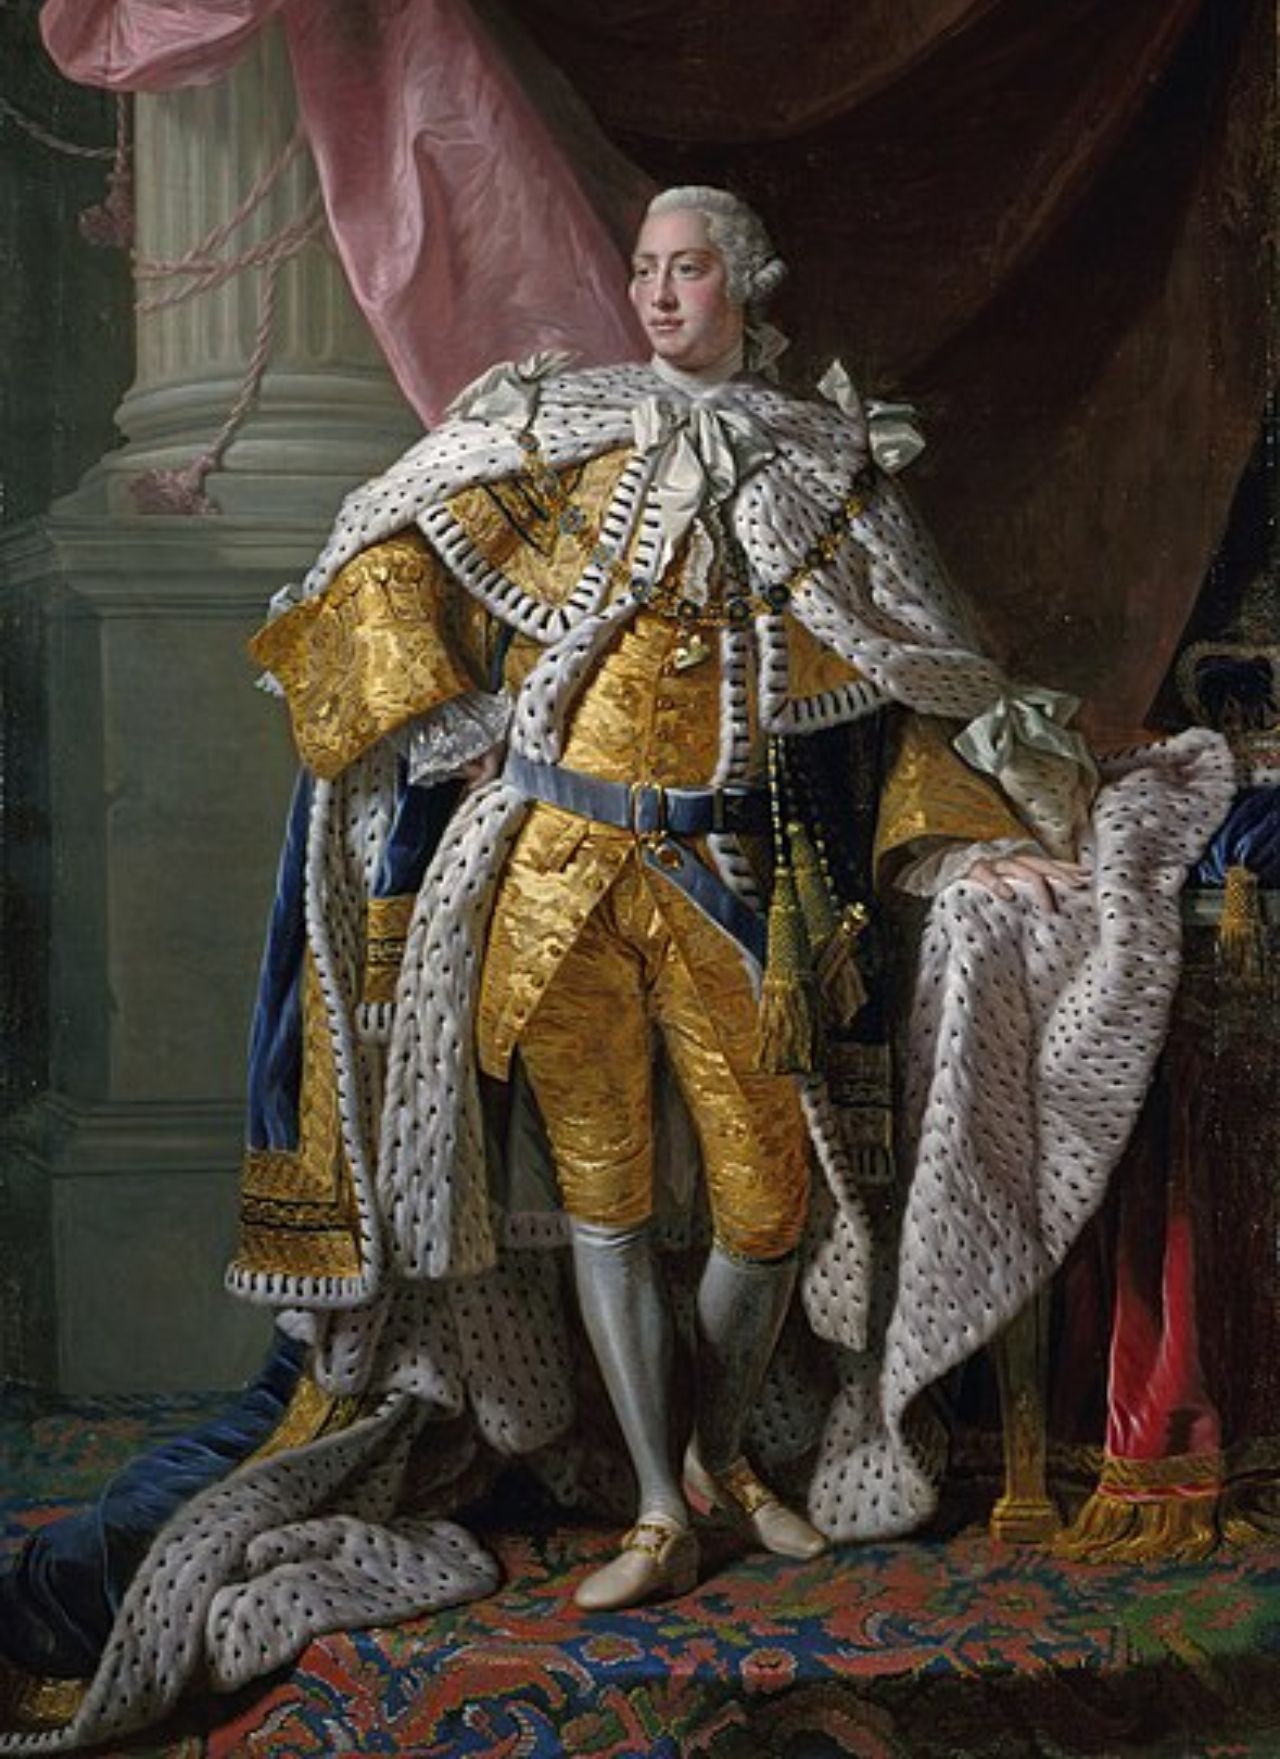 Retrato do rei George III